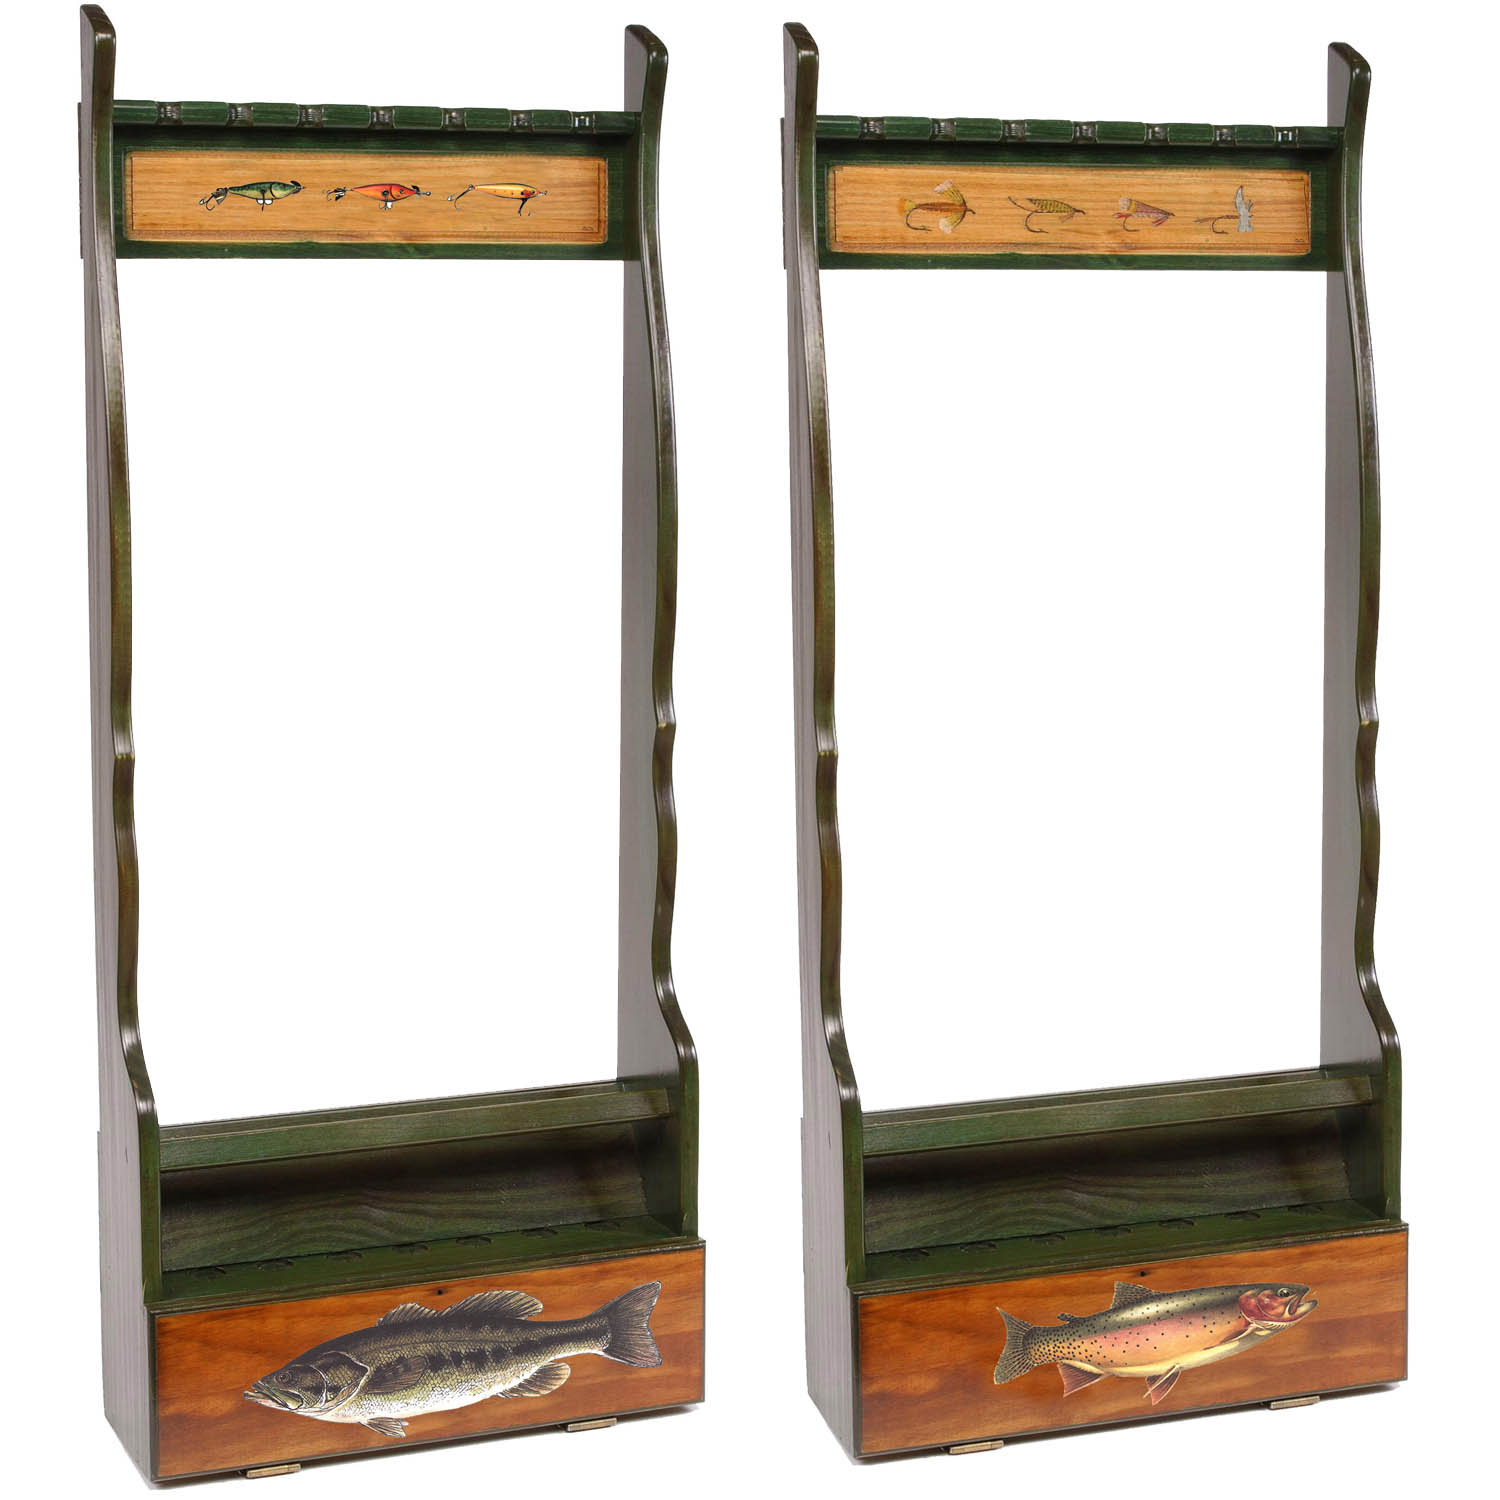 Vintage Fishing Pole Holder with Alarm